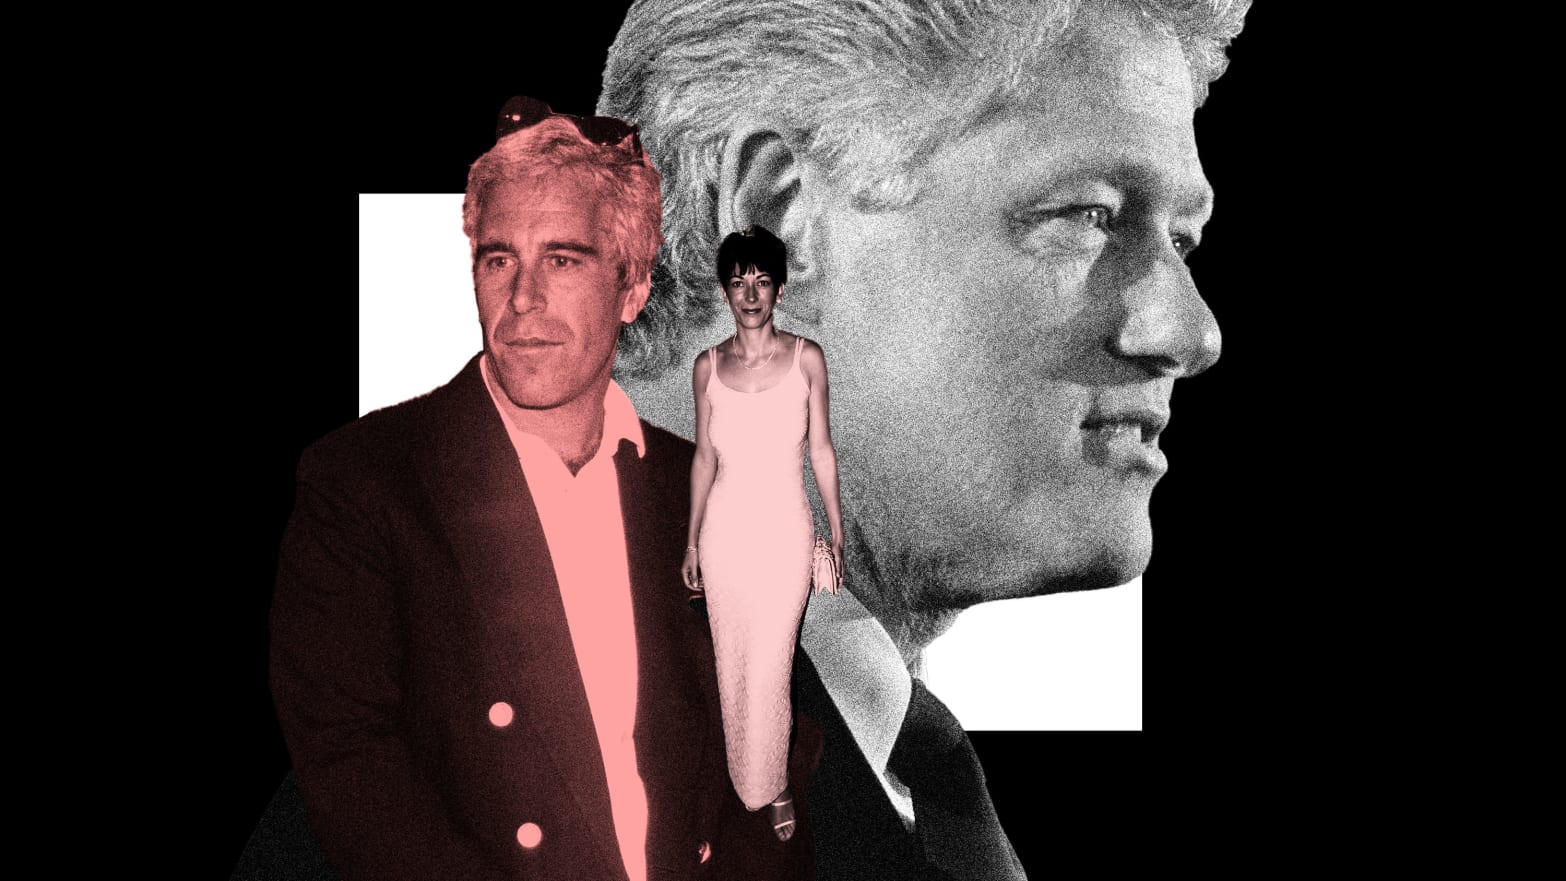 Glitzy Pics of Bill Clinton, Jeffrey Epstein and Ghislaine Maxwell Resurface